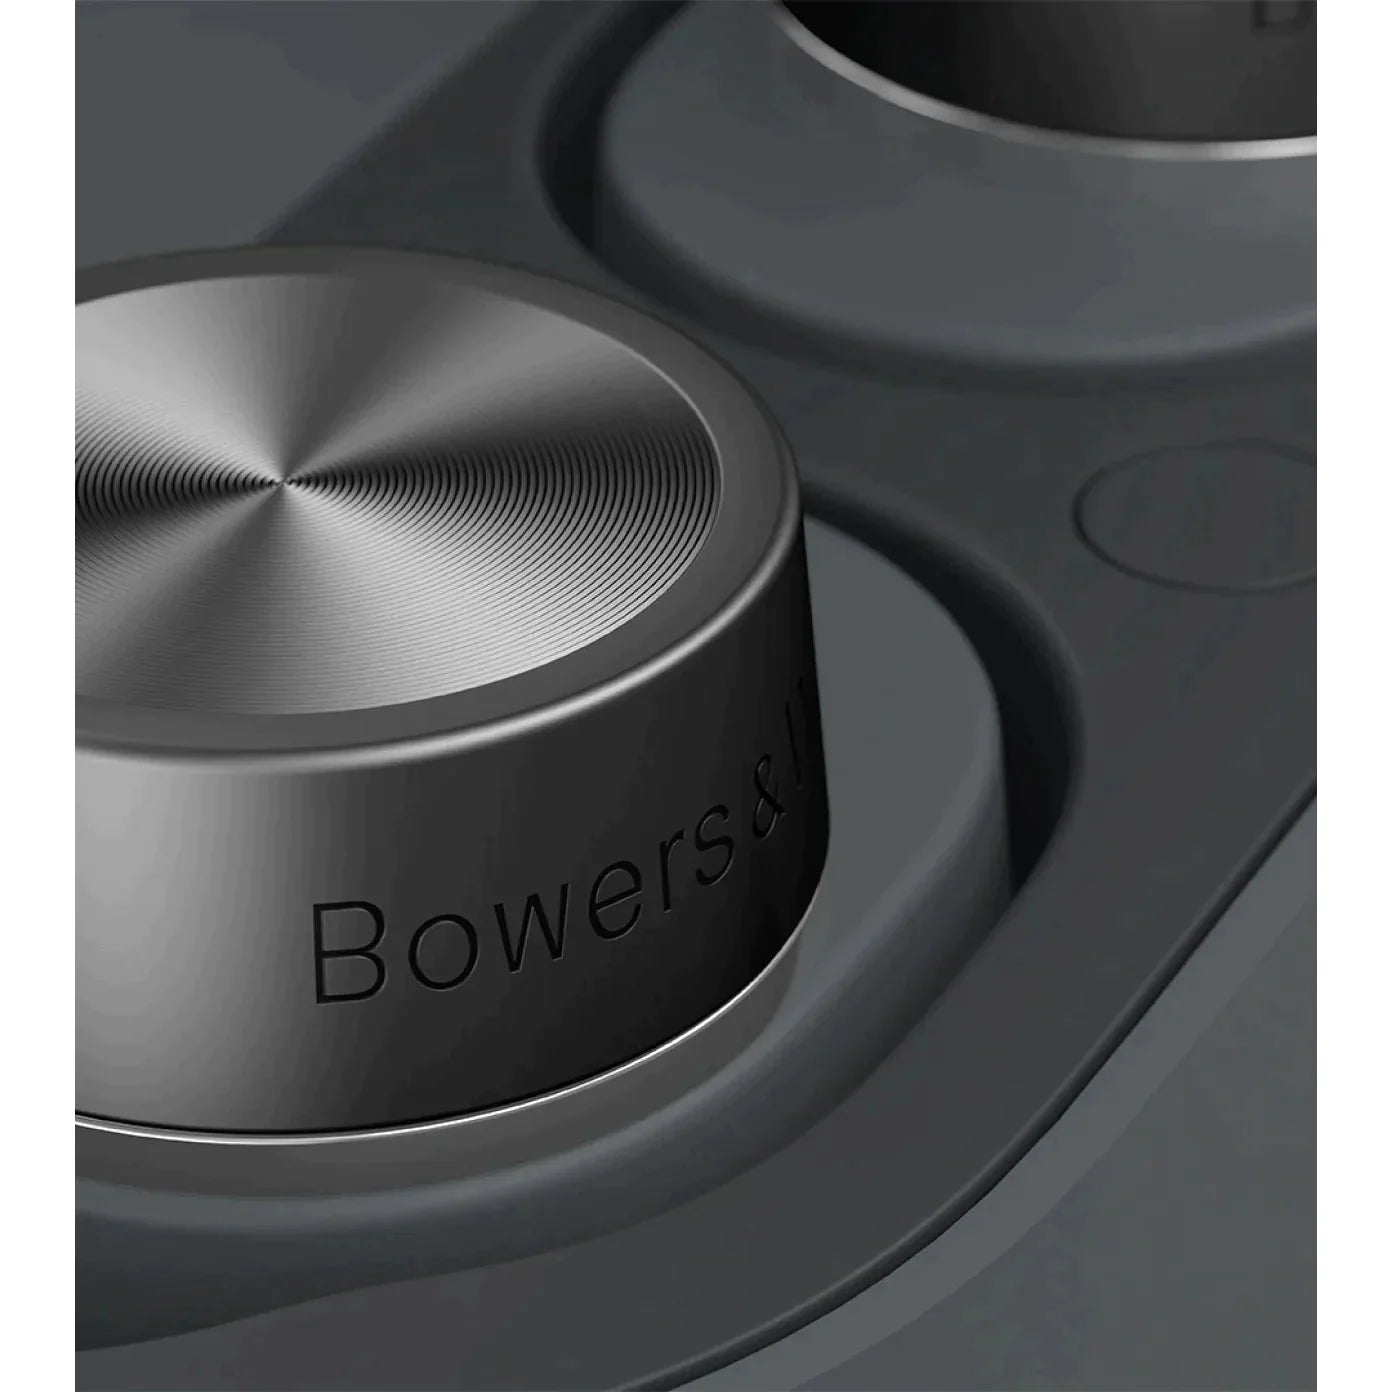 Bower Wilkins - Pi 5 S2 - True Wireless Headphones Australia